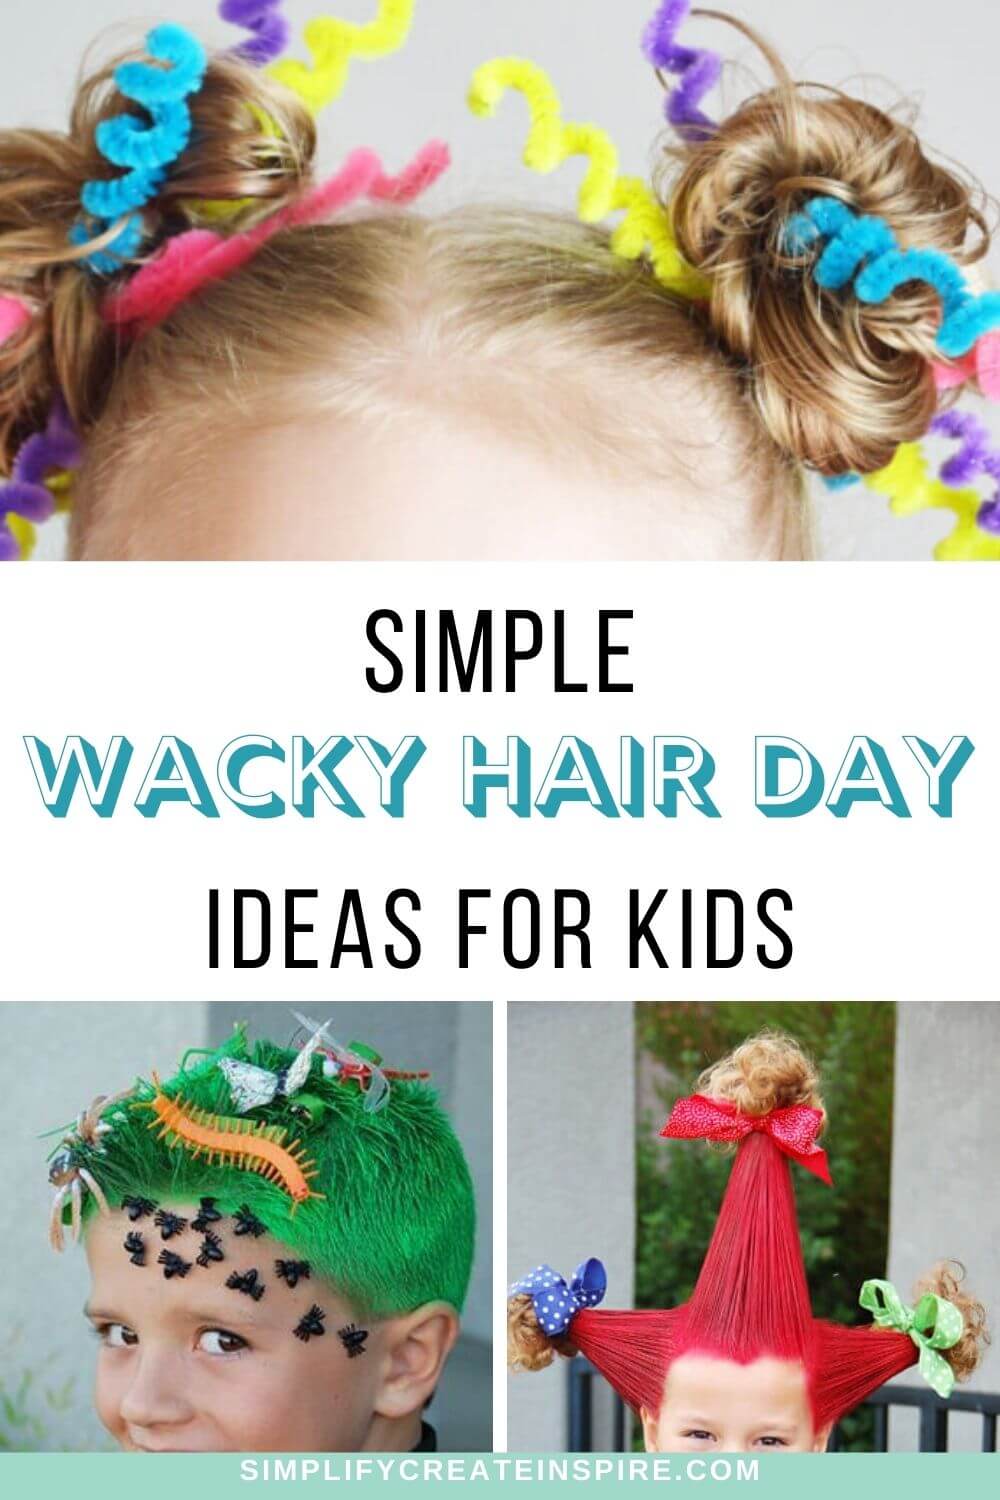 25 Easy Crazy Hair Day Ideas For Boys & Girls | Simplify Create Inspire